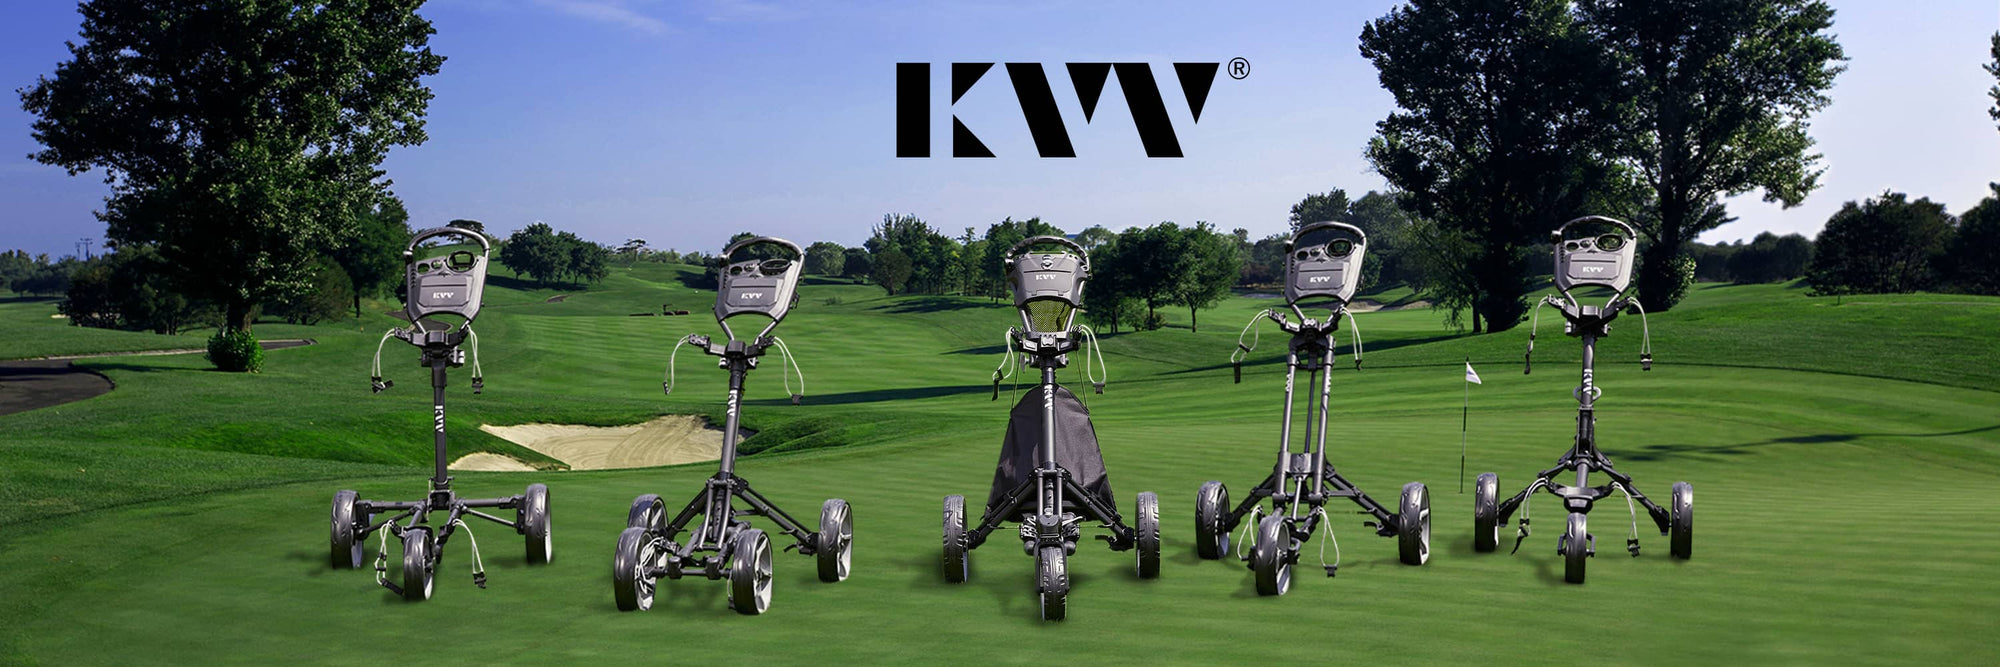 KVV golf push carts family 3 wheel and 4 wheel folding size